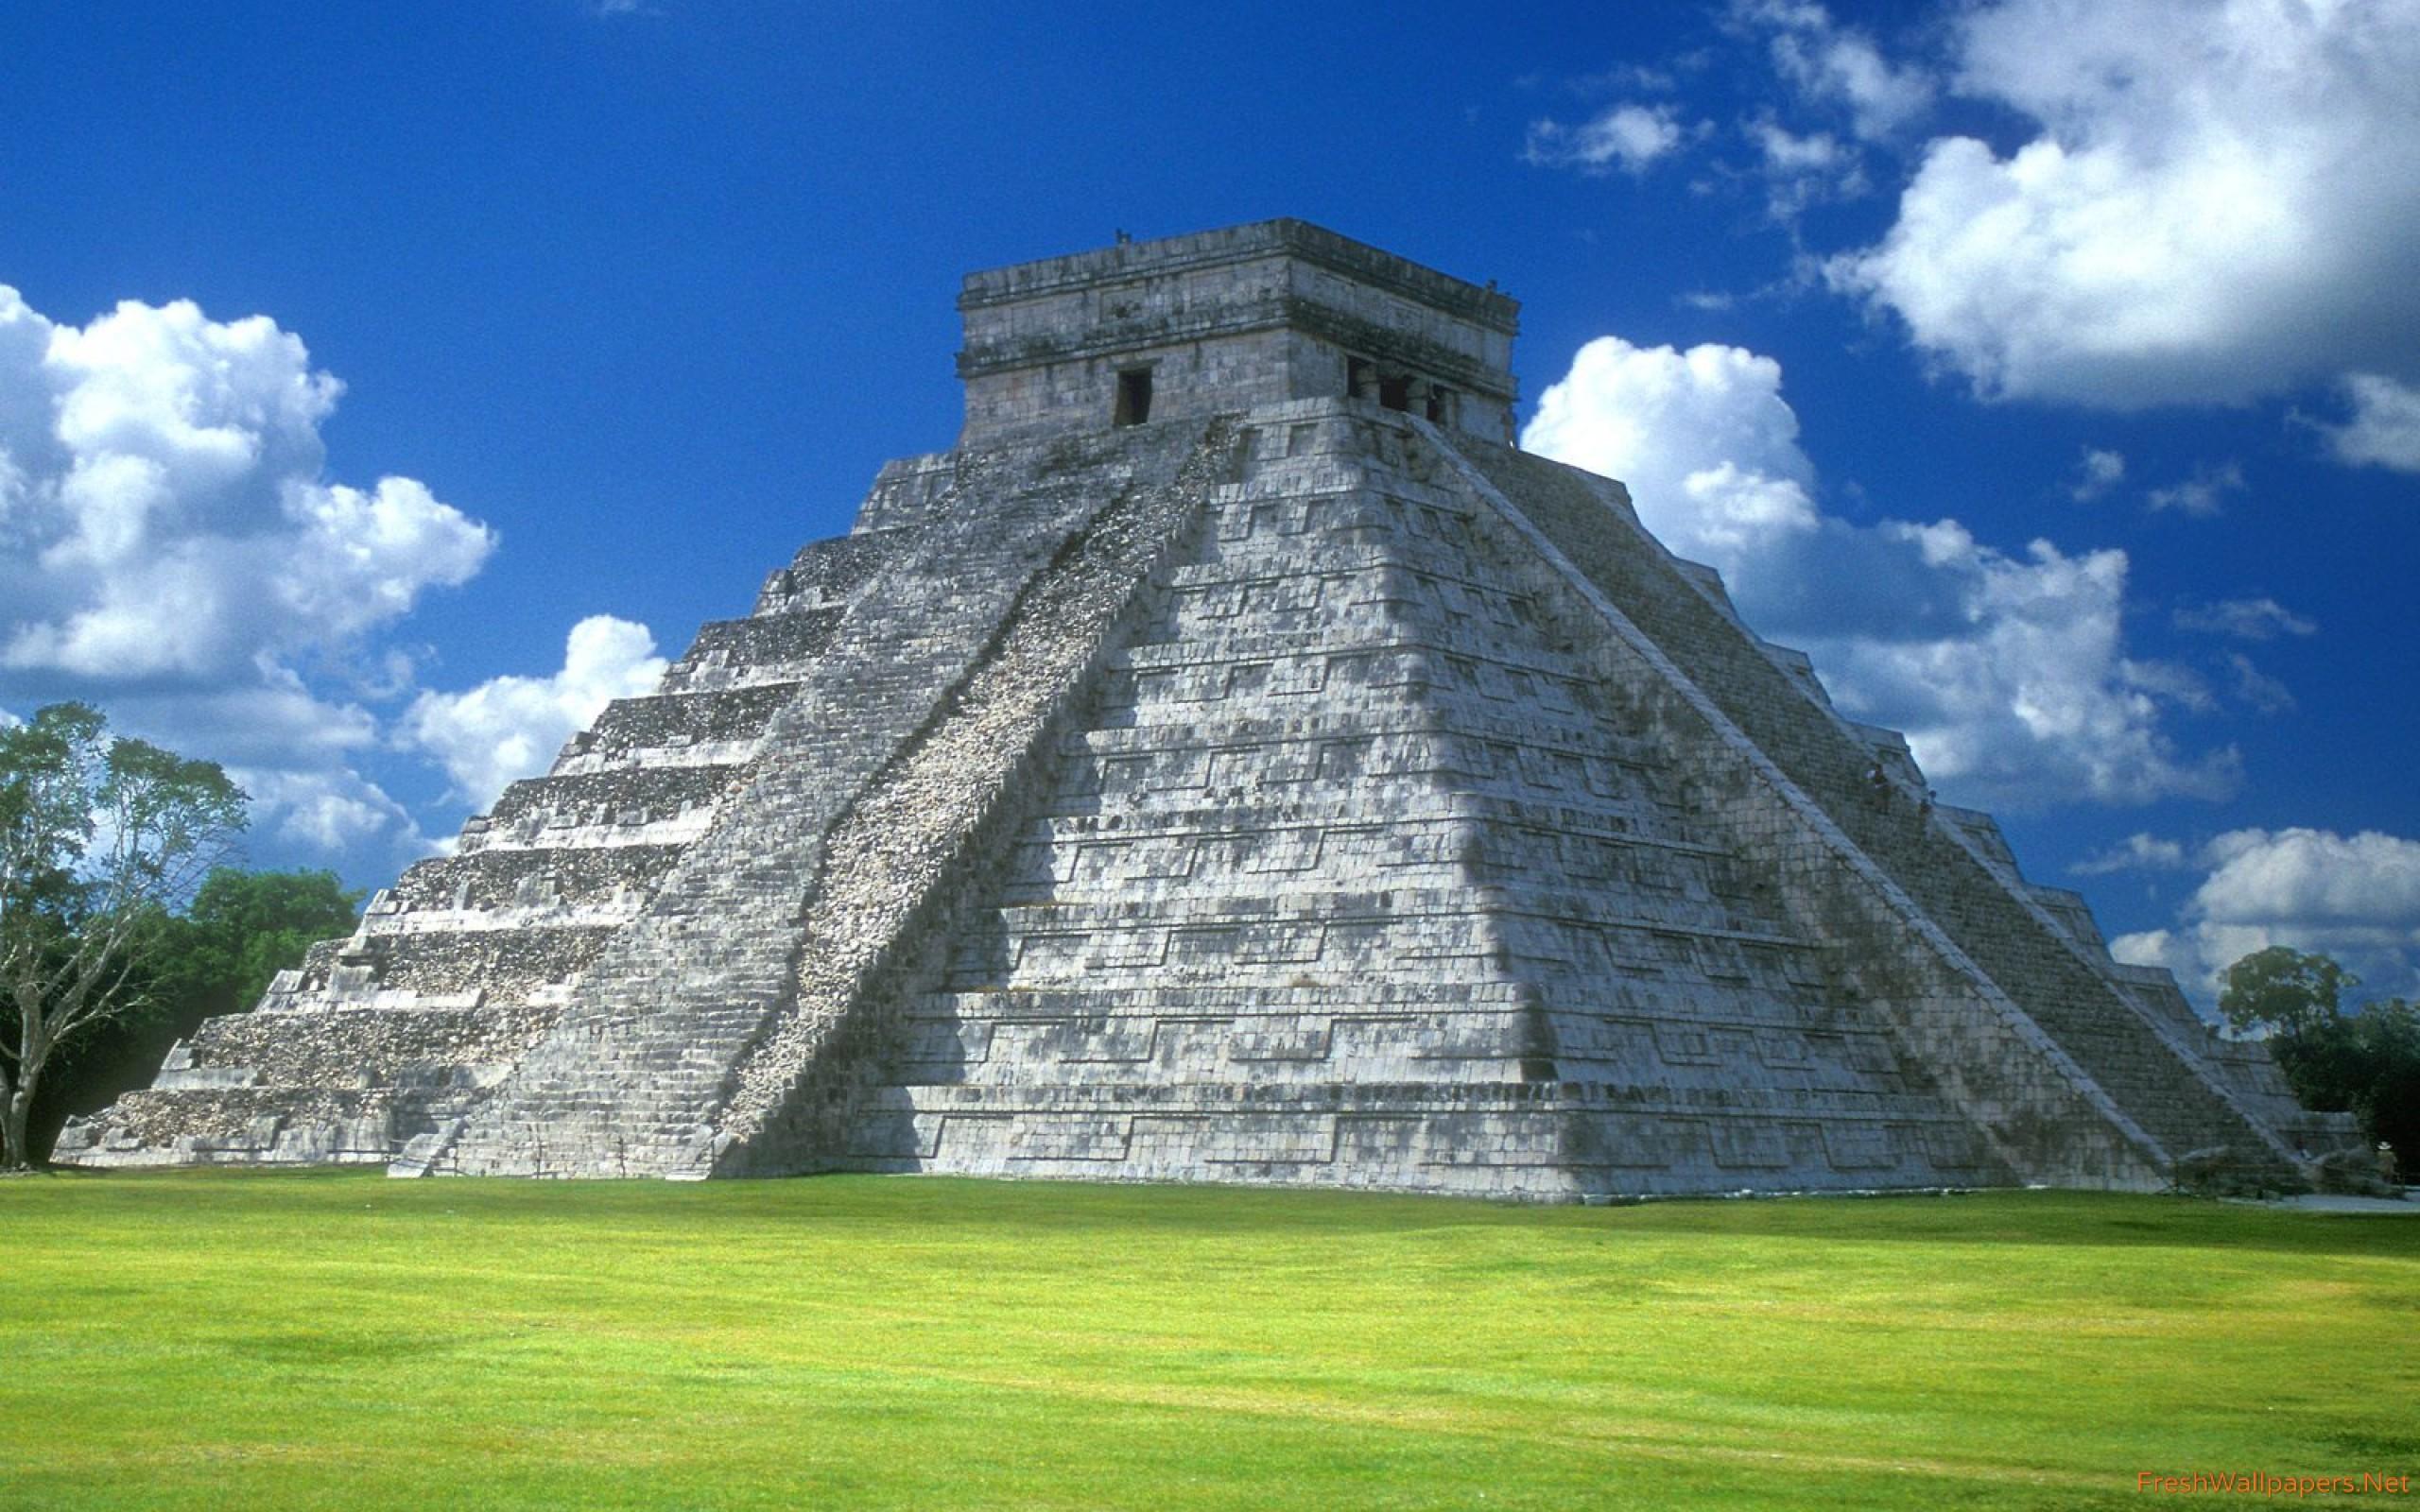 Pyramid of Kukulkбn, Chichen Itza, Yucatan Peninsula, Mexico